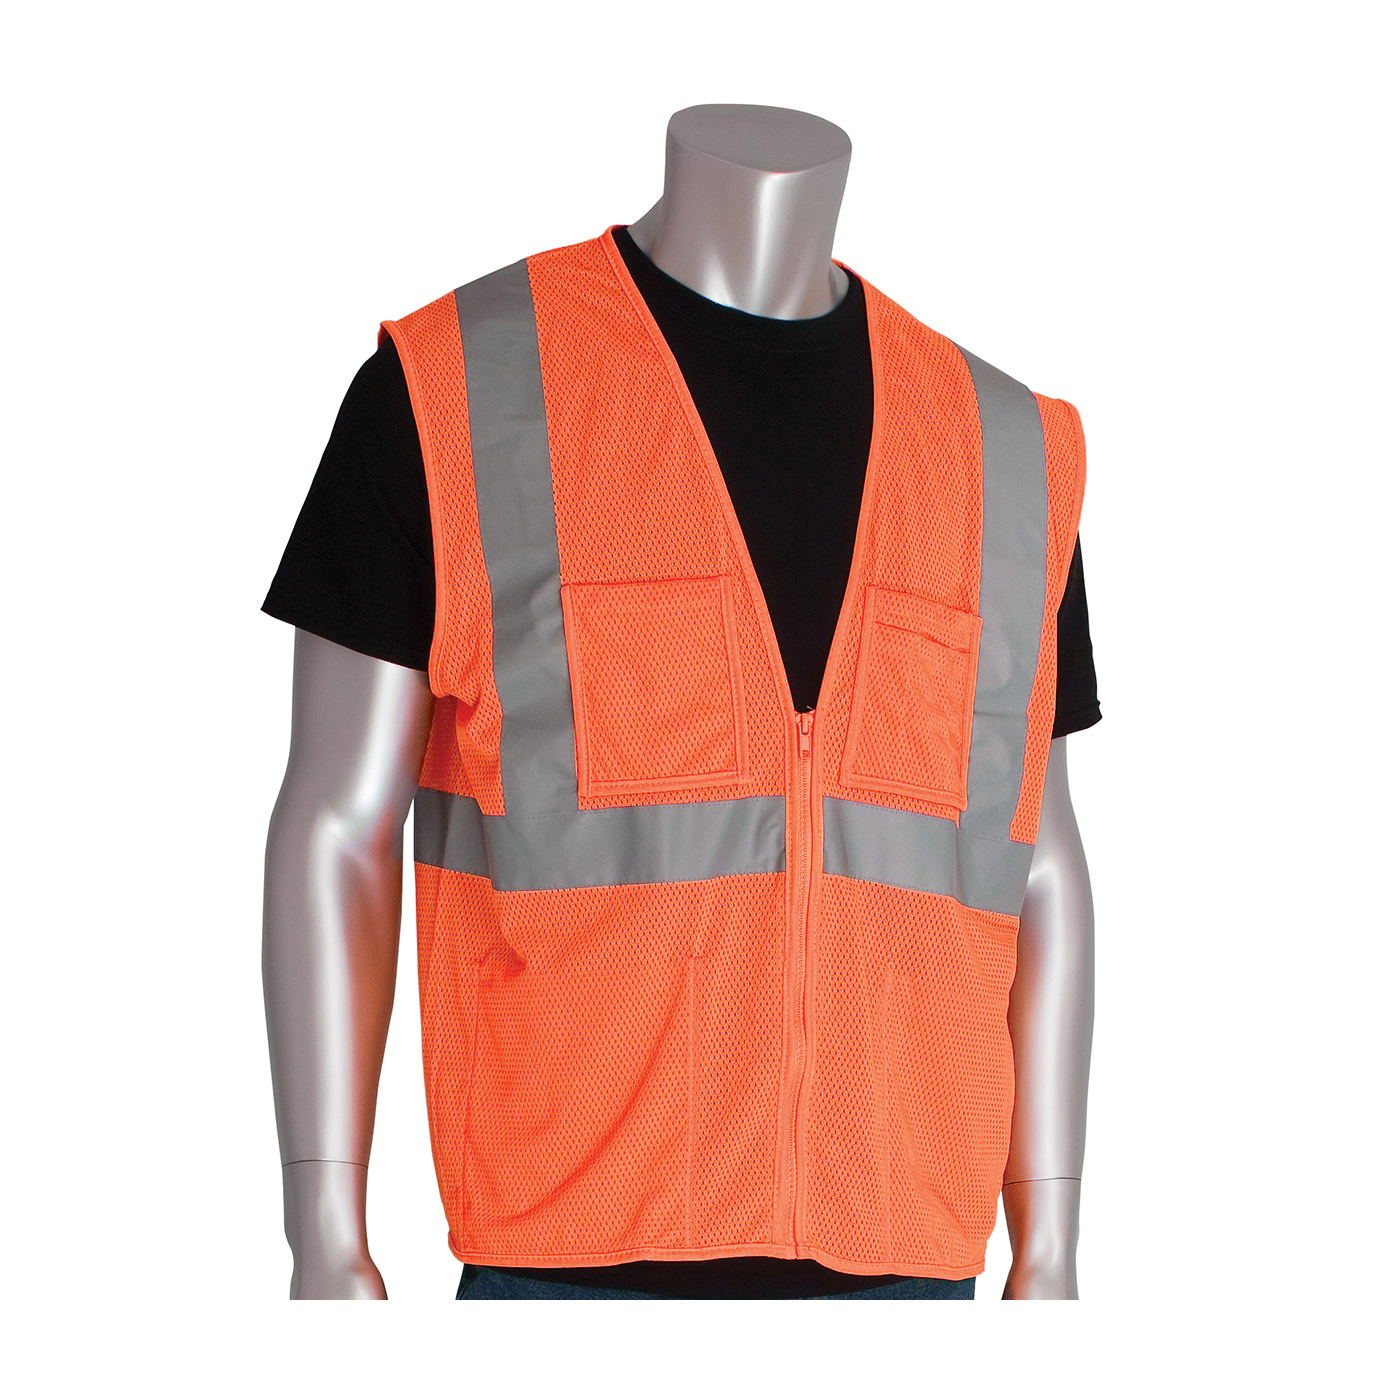 PIP® 302-MVGZ4POR-2X Safety Vest, 2XL, Hi-Viz Orange, Polyester Mesh, Zipper Closure, 4 Pockets, ANSI Class: Class 2, Specifications Met: ANSI 107 Type R